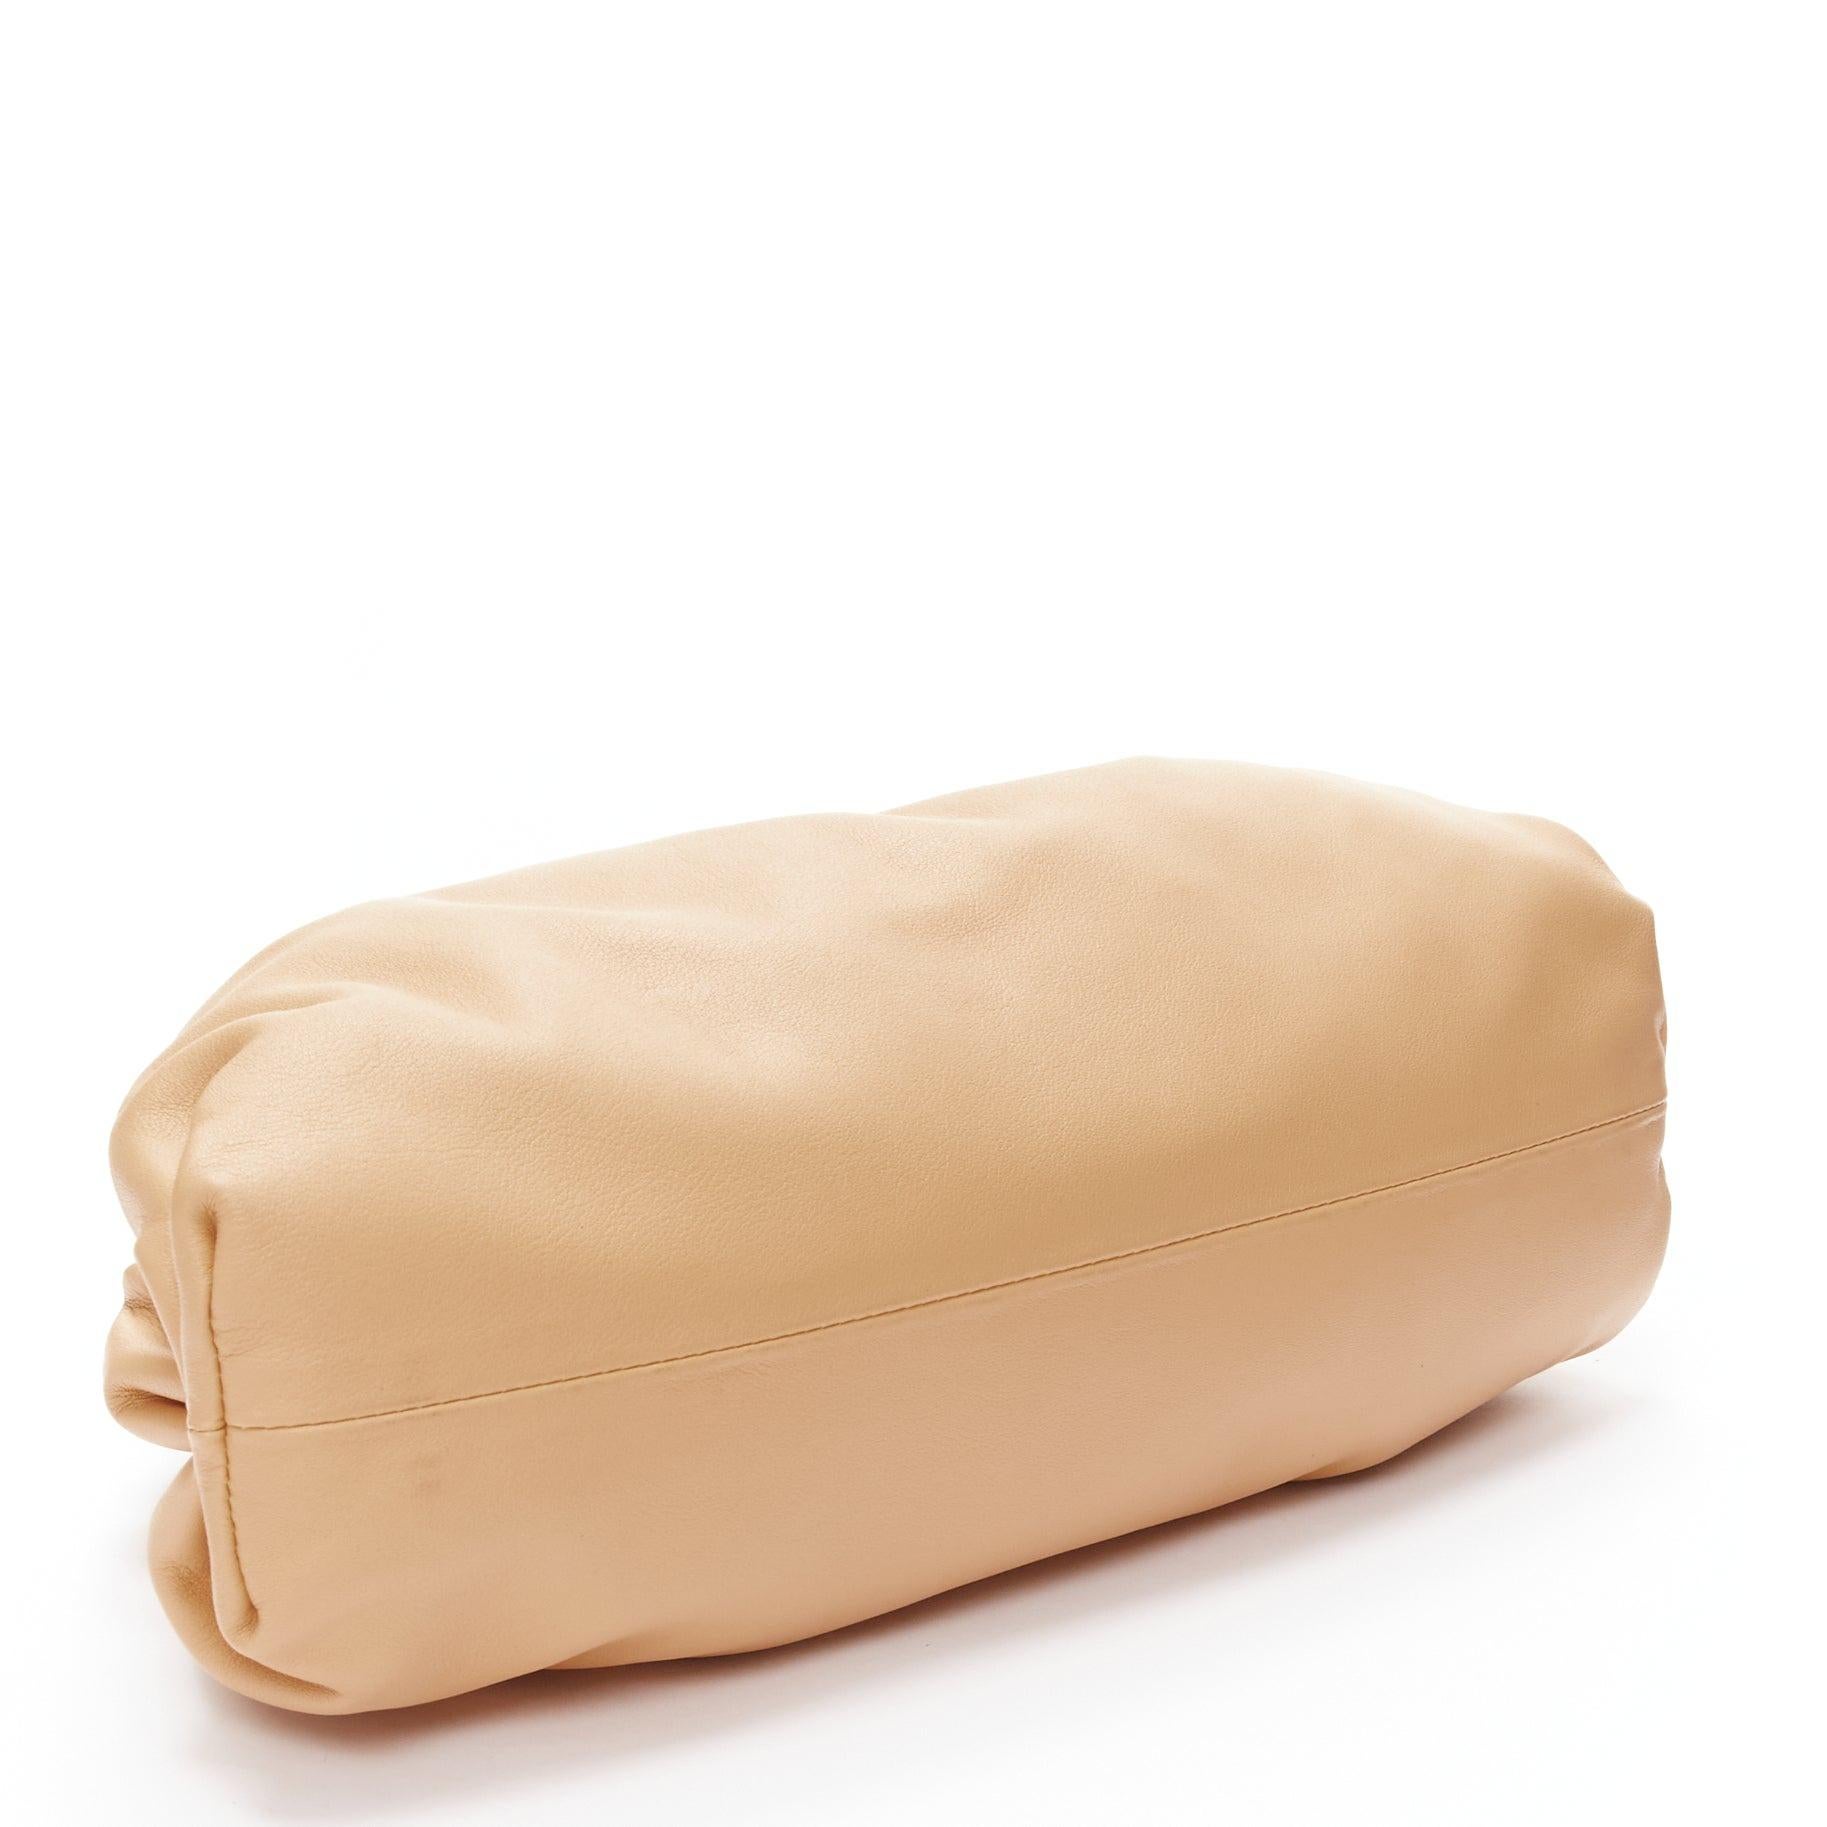 BOTTEGA VENETA The Pouch Small tan brown leather dumpling clutch bag For Sale 1